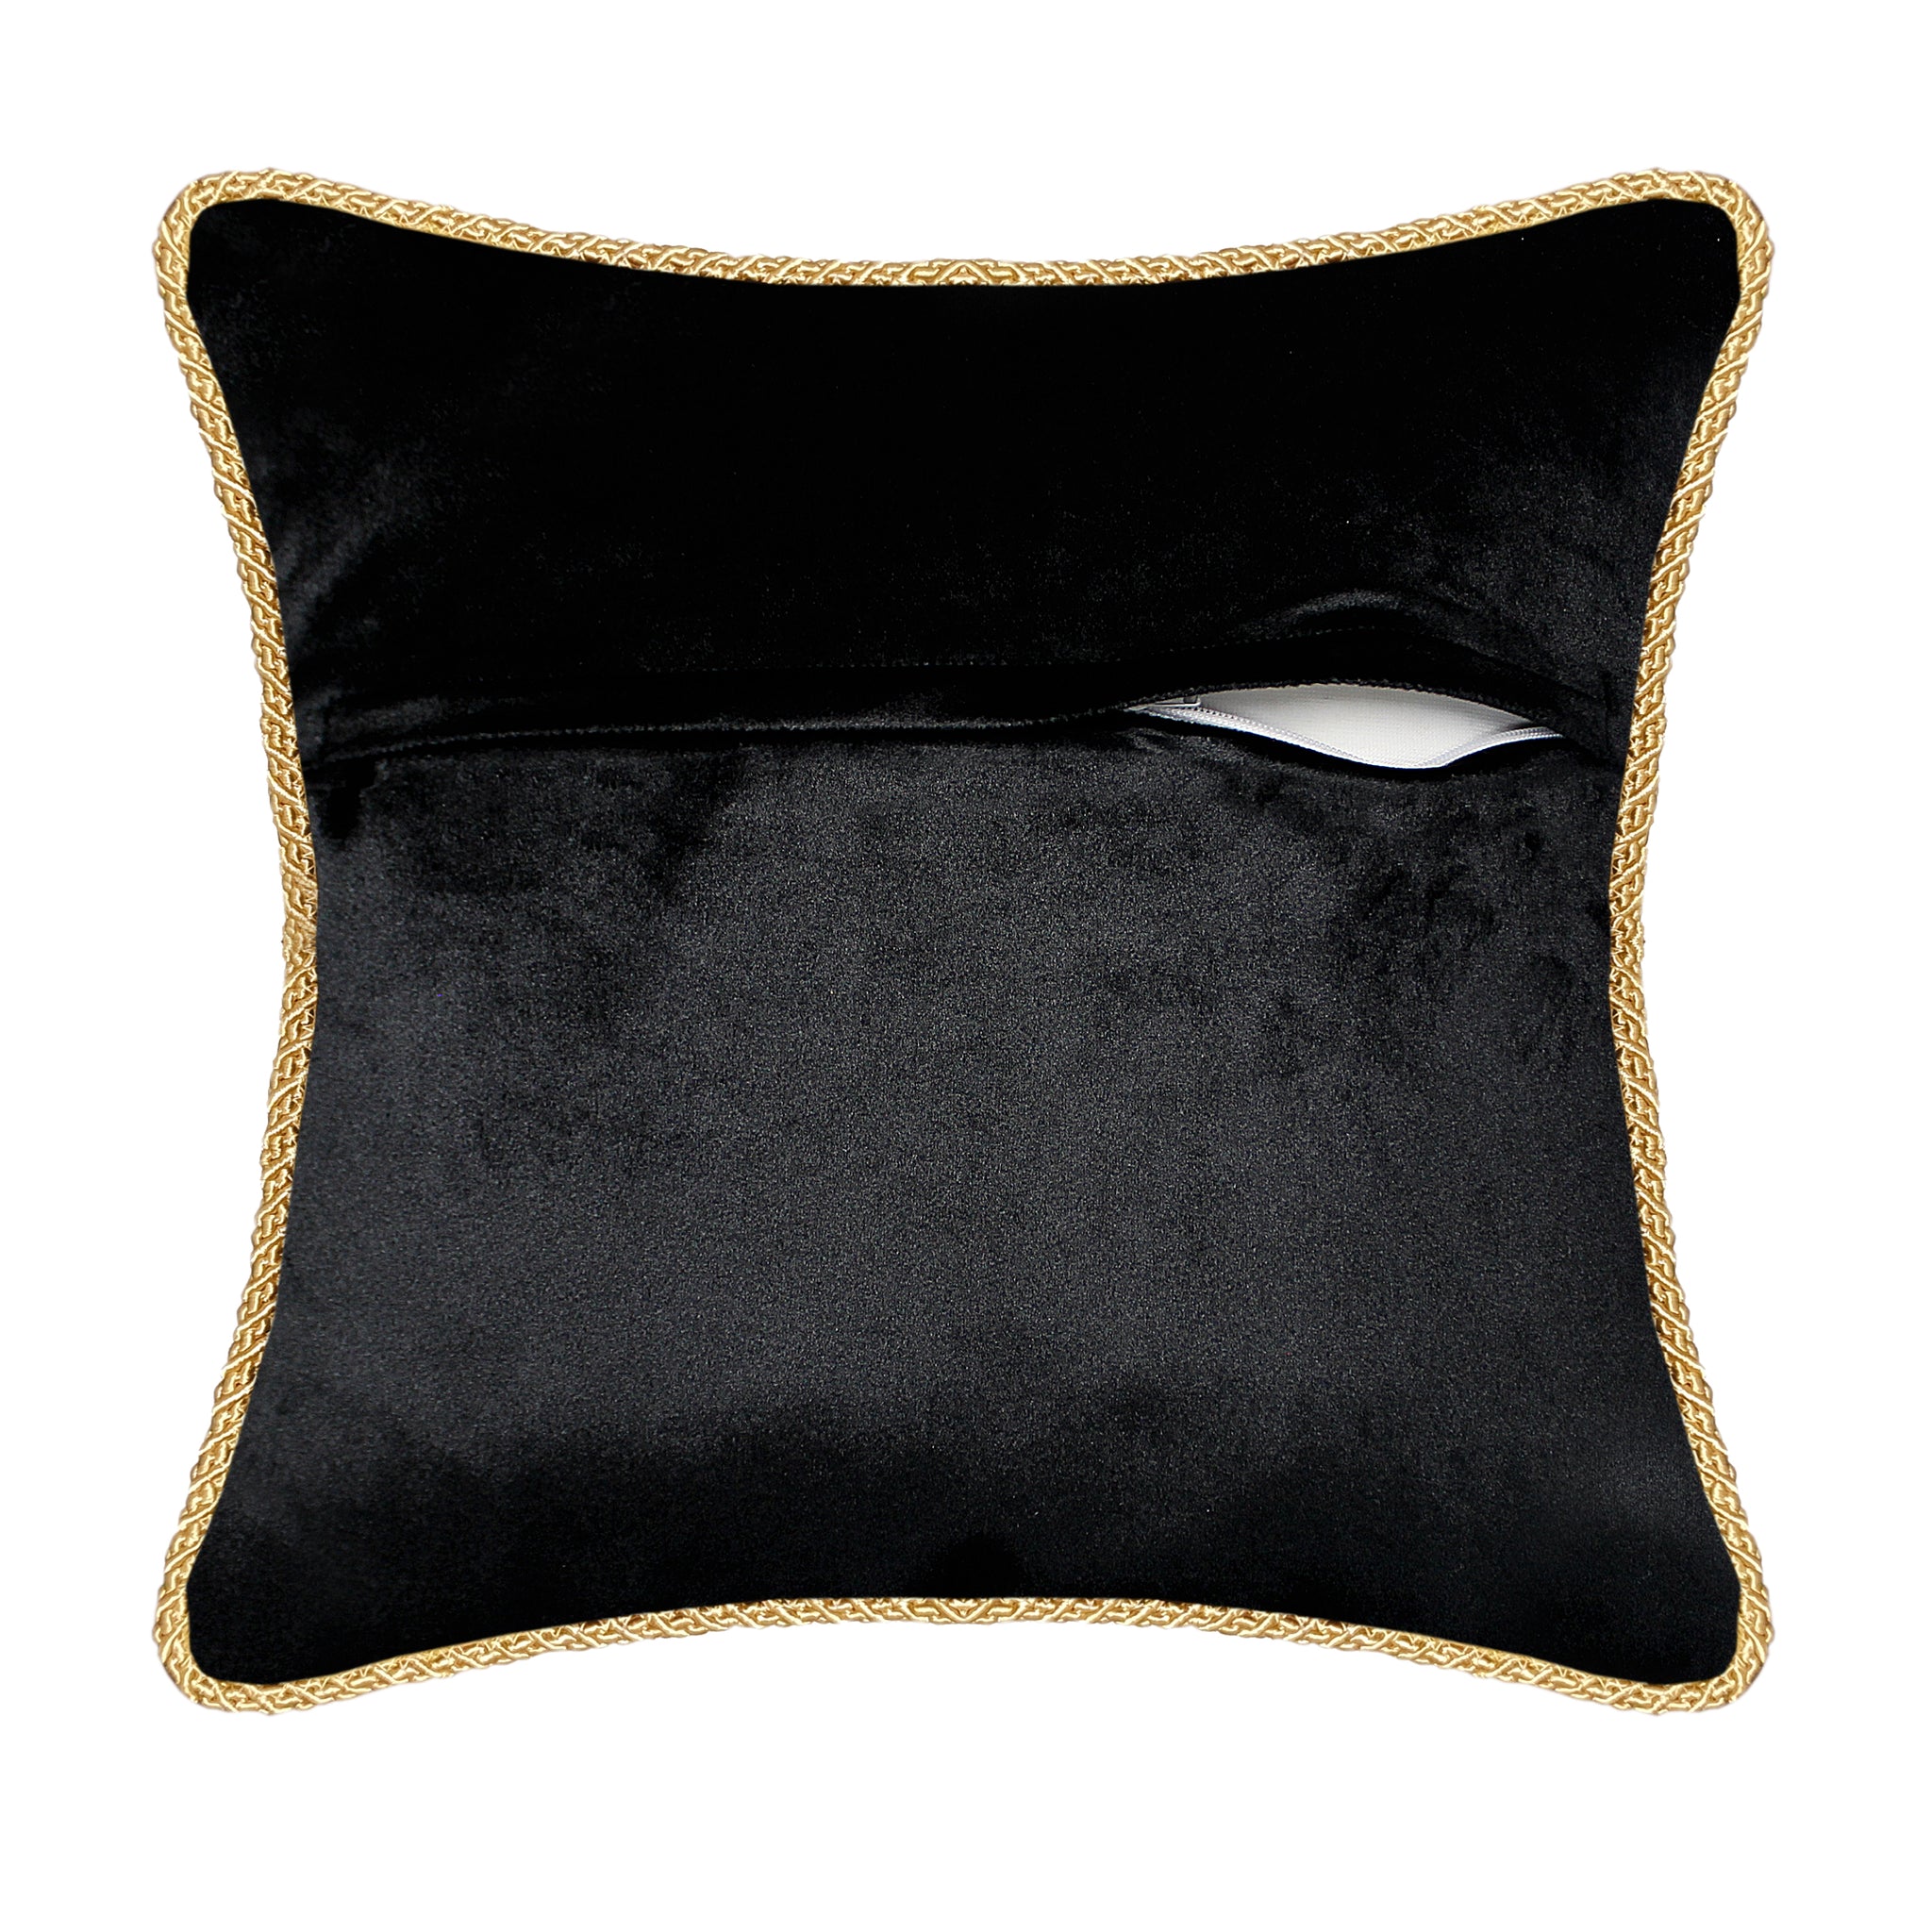 Velvet Cushion Cover Colorful Bumble Bee Motif Embroidery Decorative Pillowcase Modern Home Decor Throw Pillow for Sofa Chair 45x45 cm